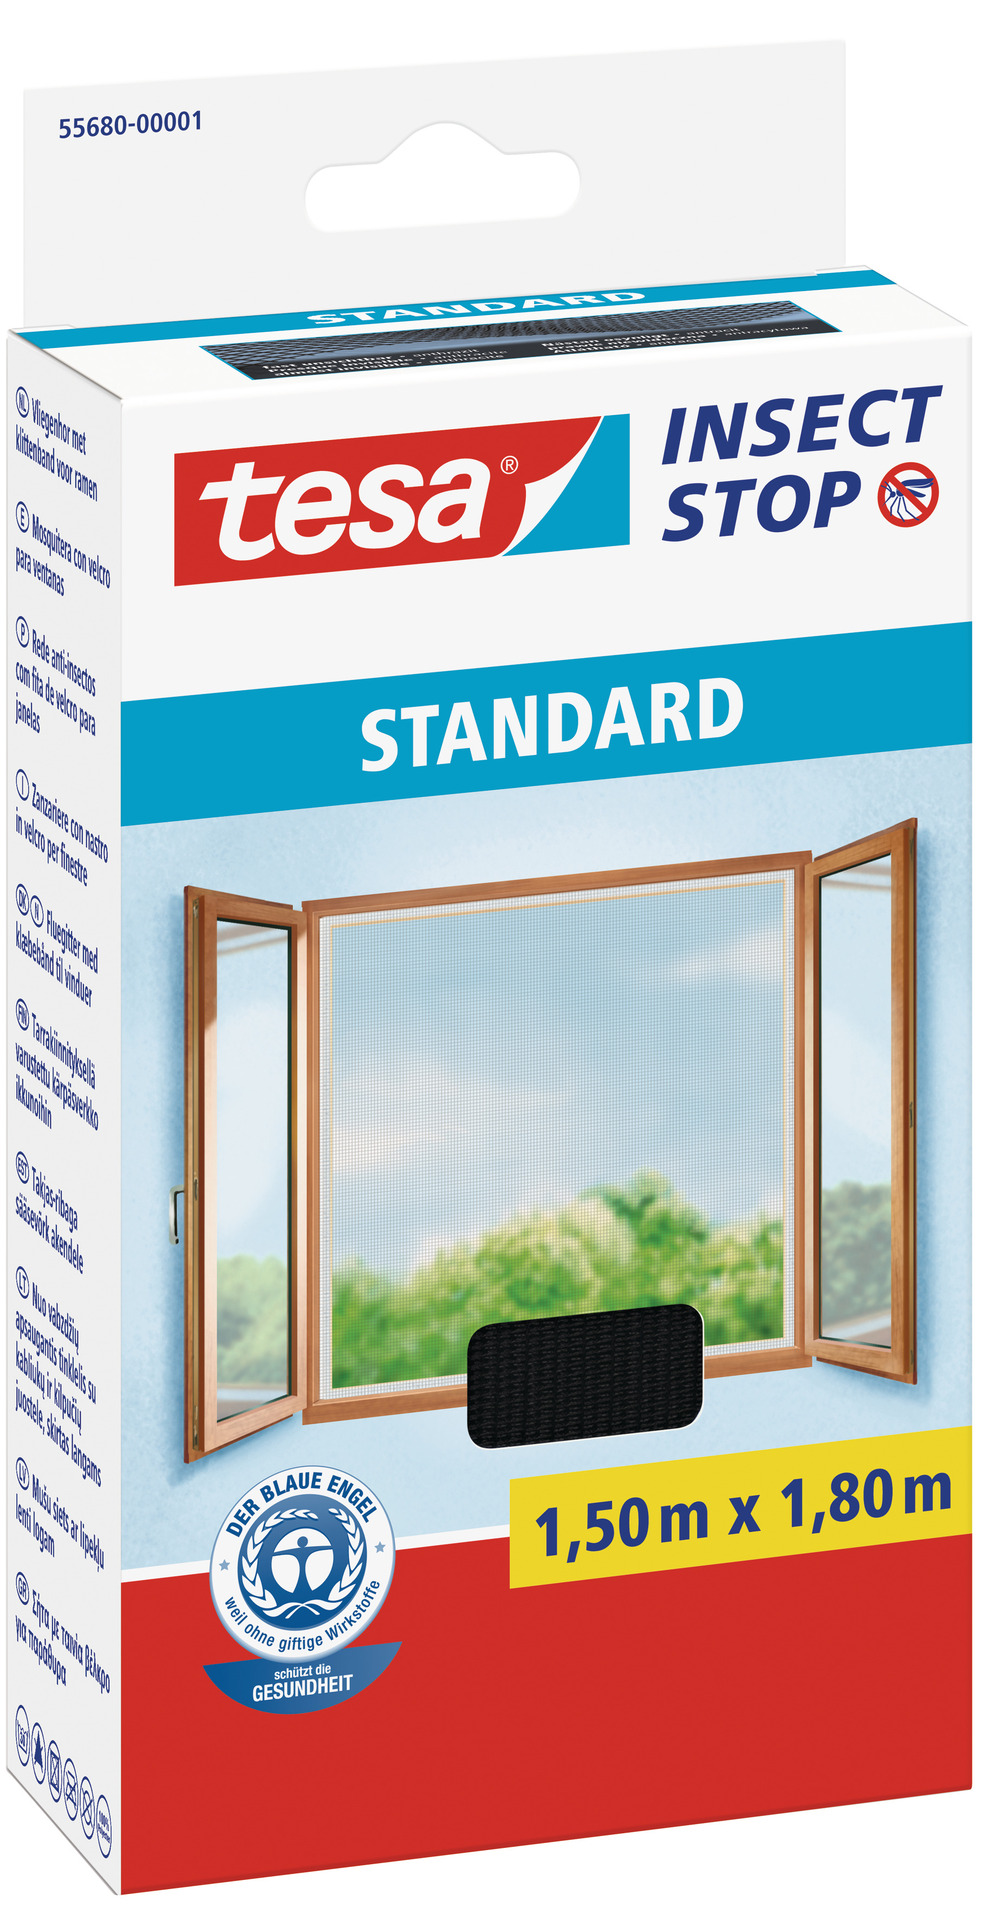 TESA SE Tesa Fliegengitter Standard